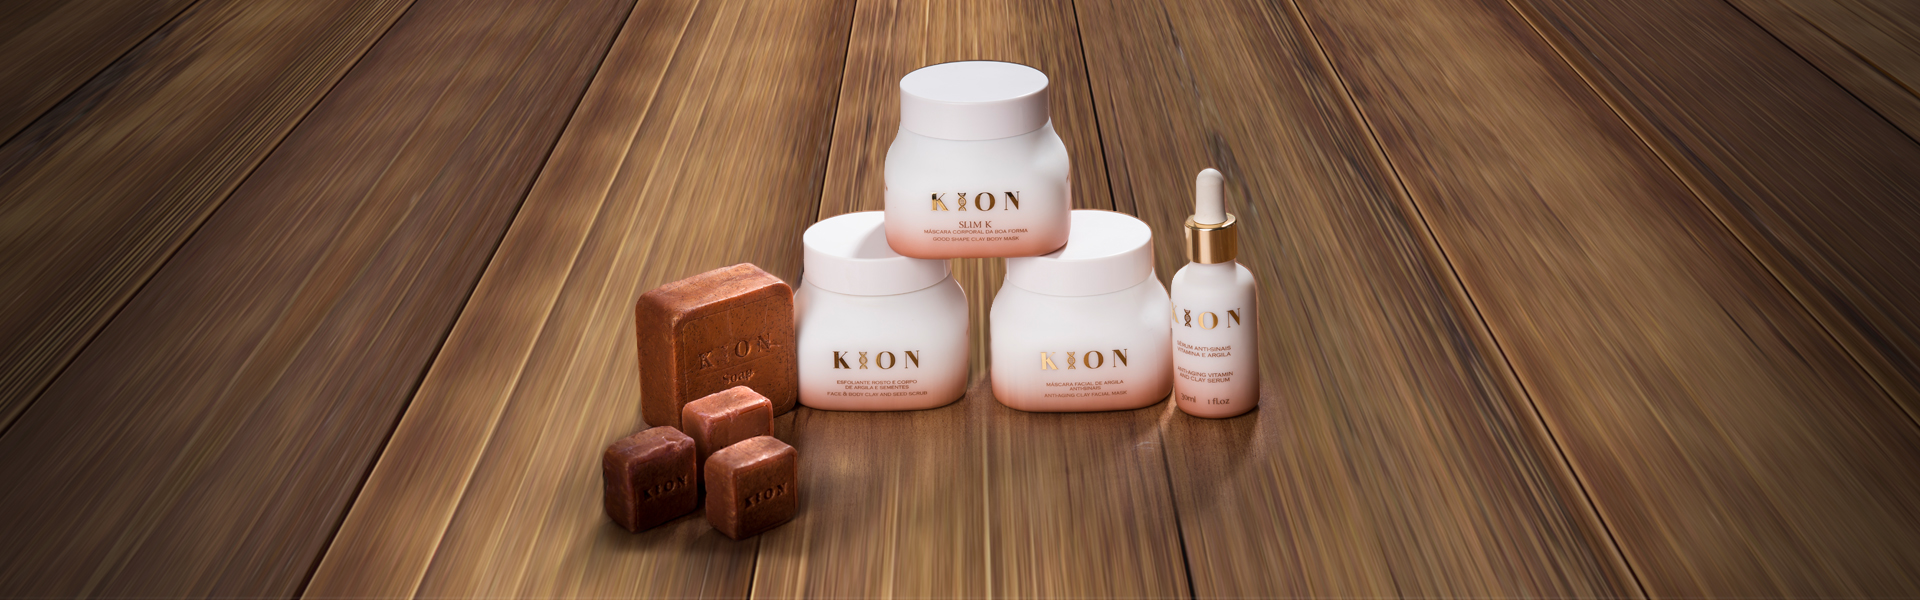 Kion Cosmetics - A natureza cuidando da sua beleza.